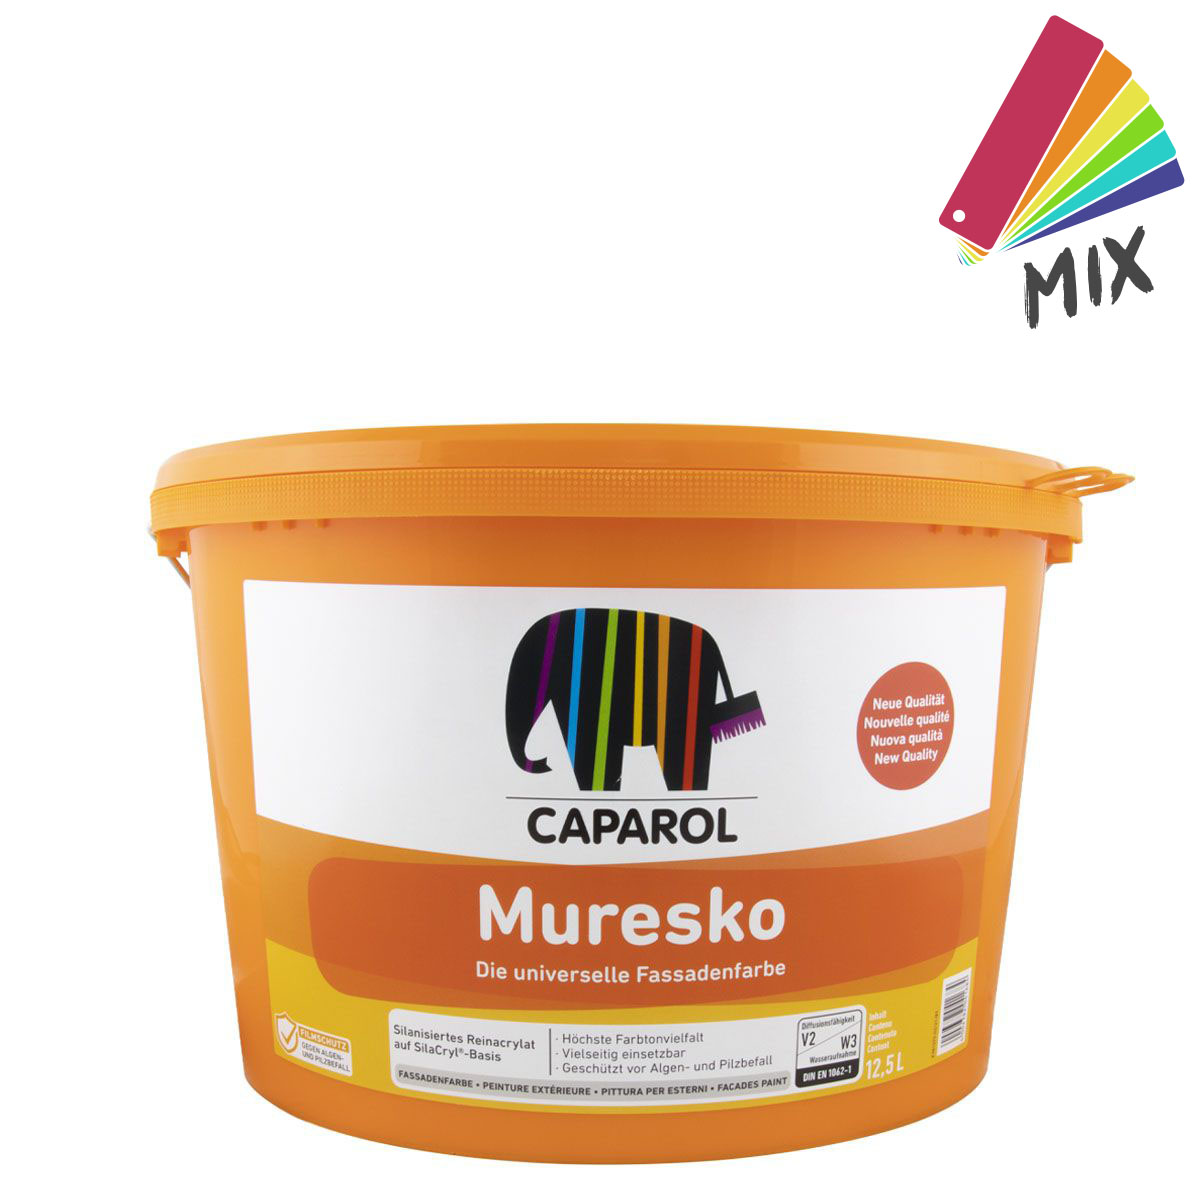 Caparol Muresko SilaCryl 12,5L MIX, PG S,Siliconharz-Fassadenfarbe